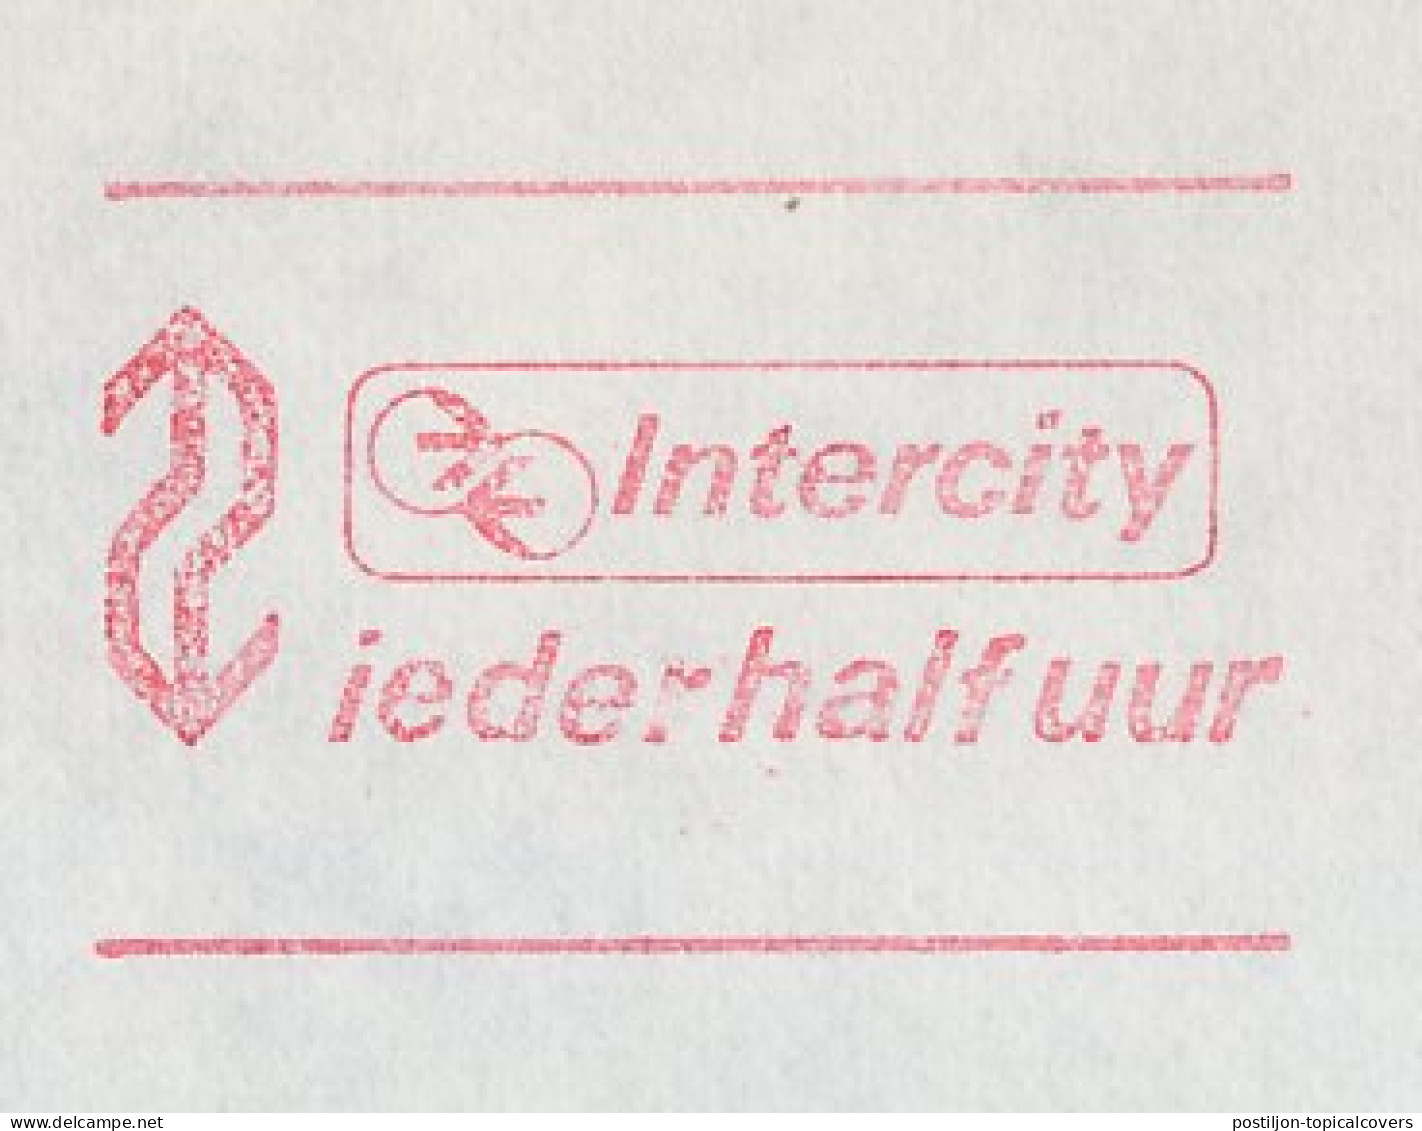 Illustrated Meter Cover Netherlands 1978 - Hasler 2997 NS - Dutch Railways - Intercity Every Half Hour - Tilburg - Trains